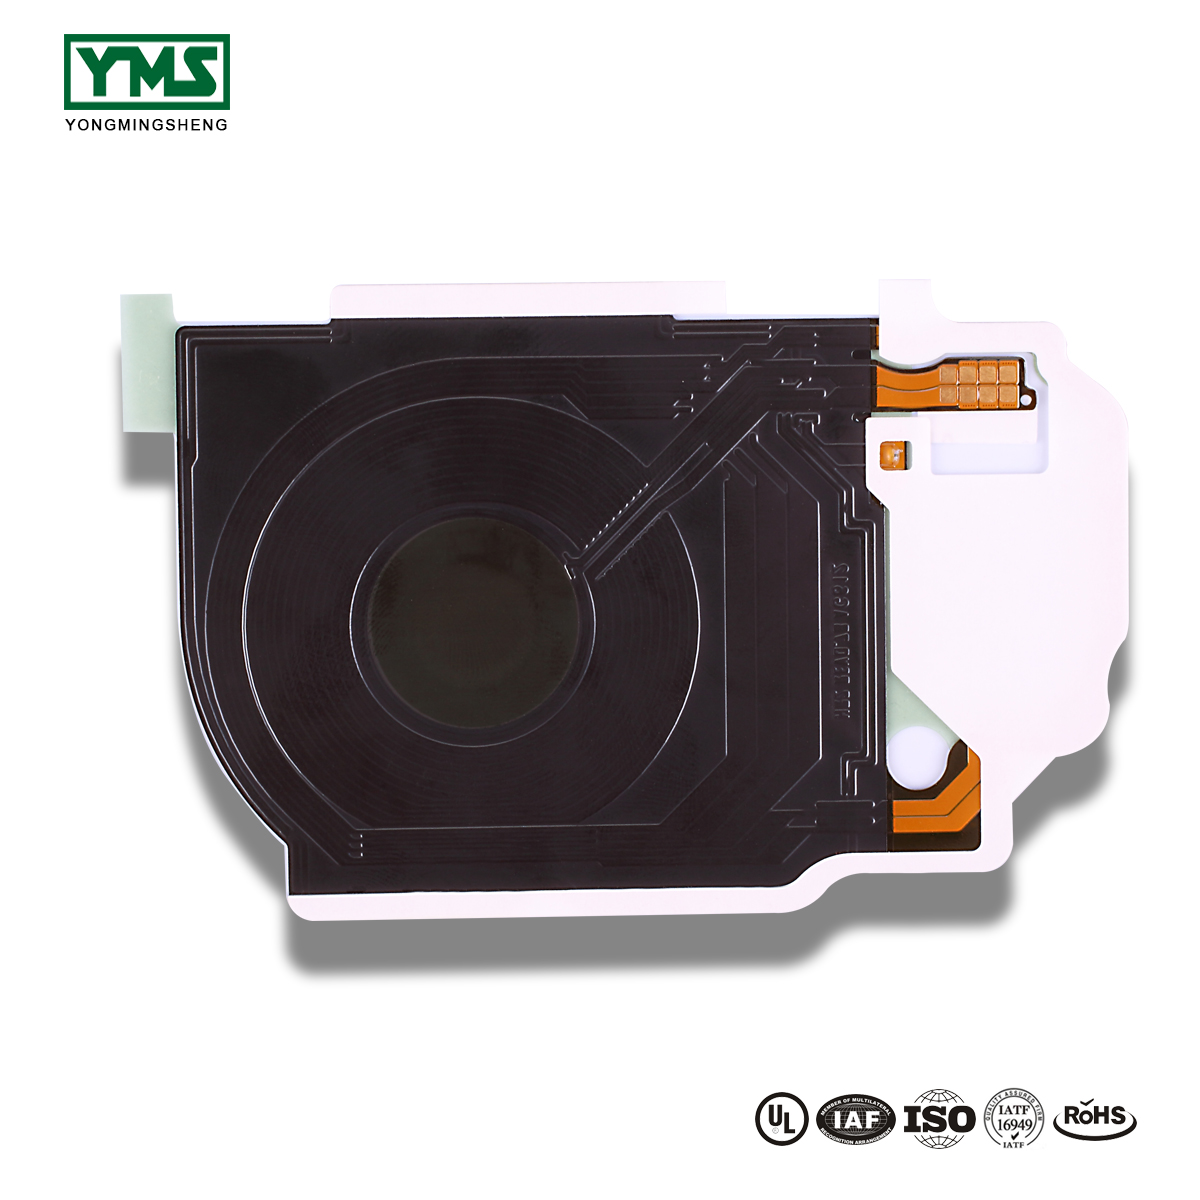 China Manufacturer for Small Printed Circuit Board - 1Layer camera module Flexible Board | YMSPCB – Yongmingsheng